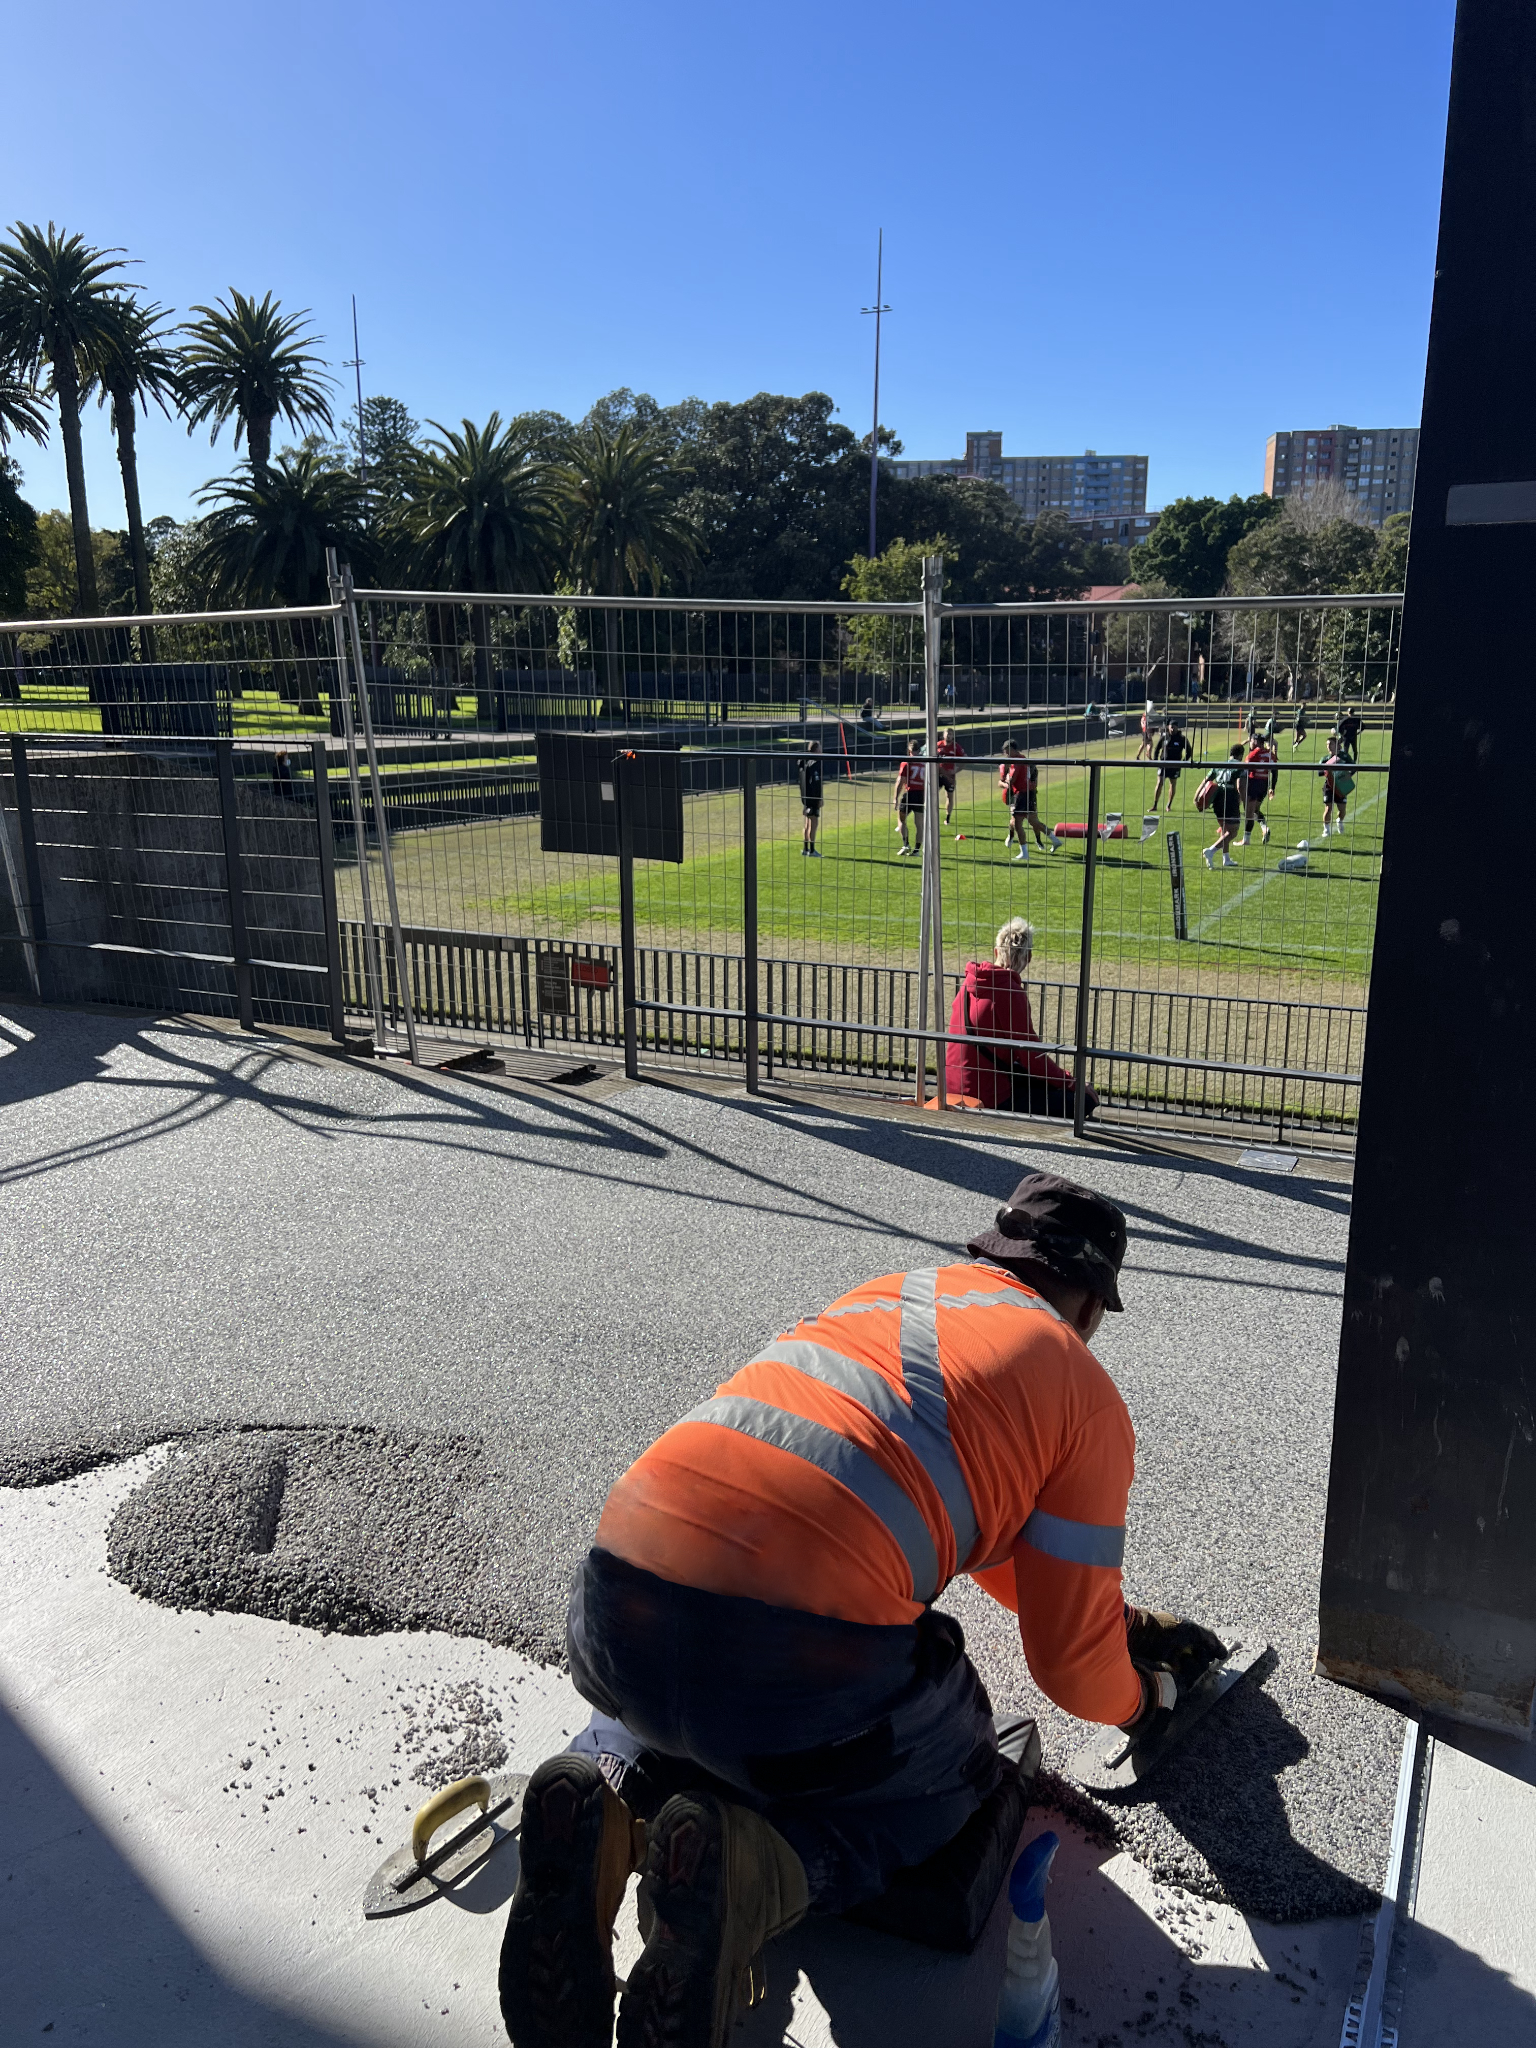 South Sydney Rabbitohs Club 2022 - Construction